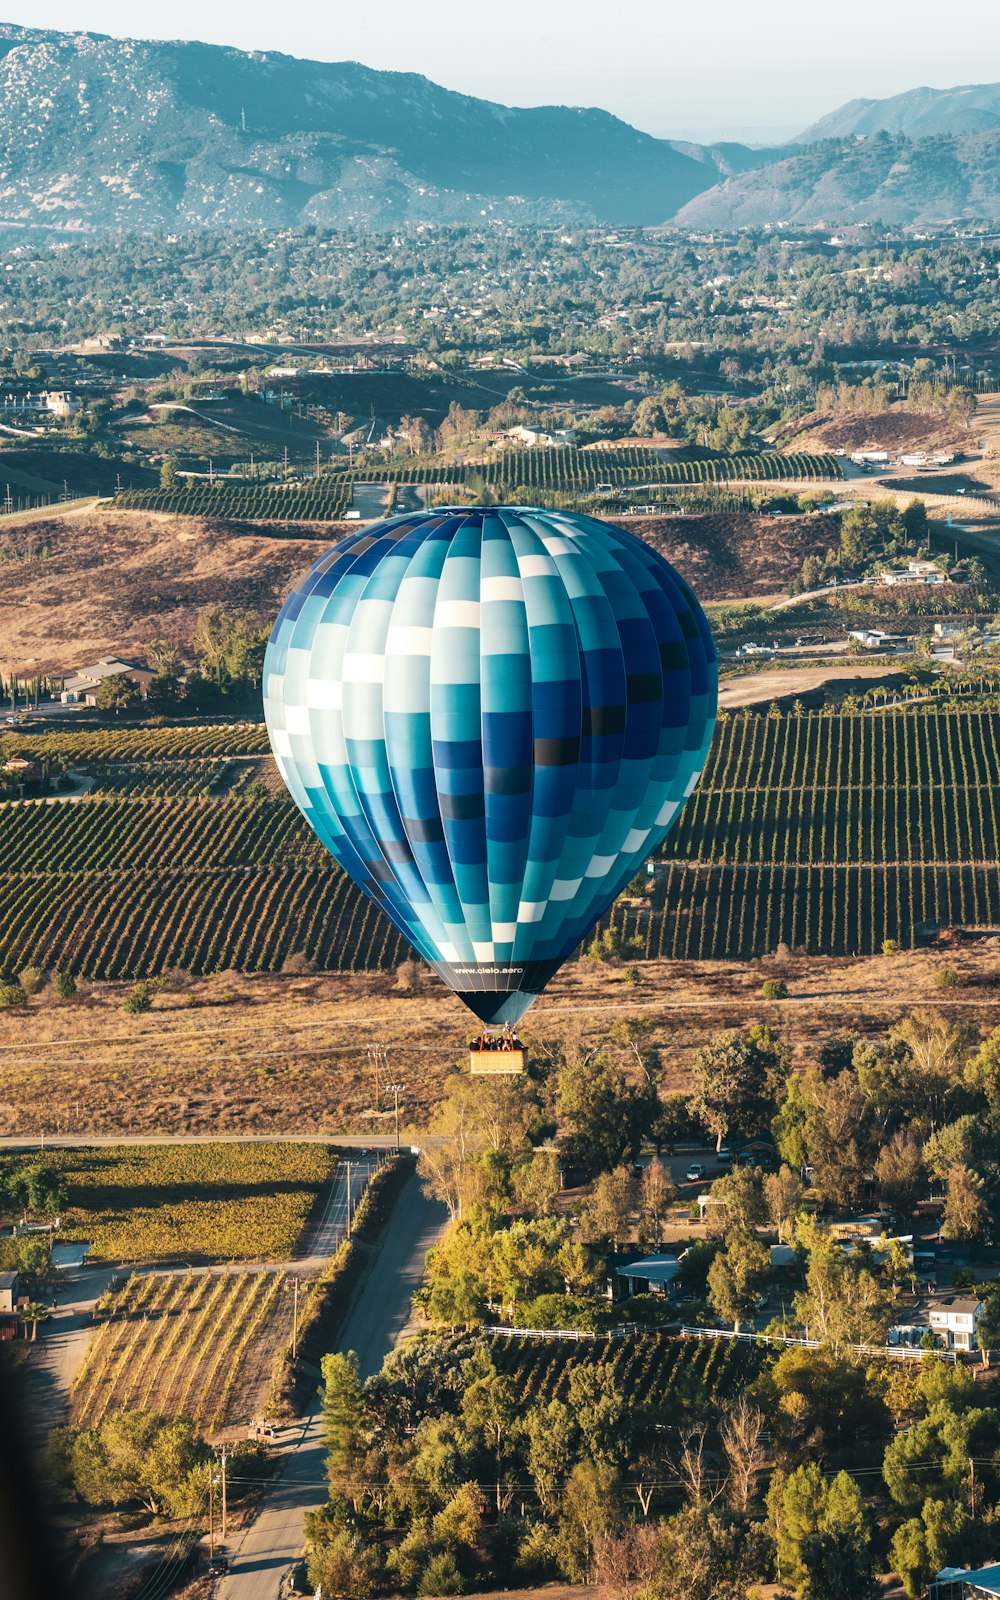 a hot air balloon flying over a vineyard